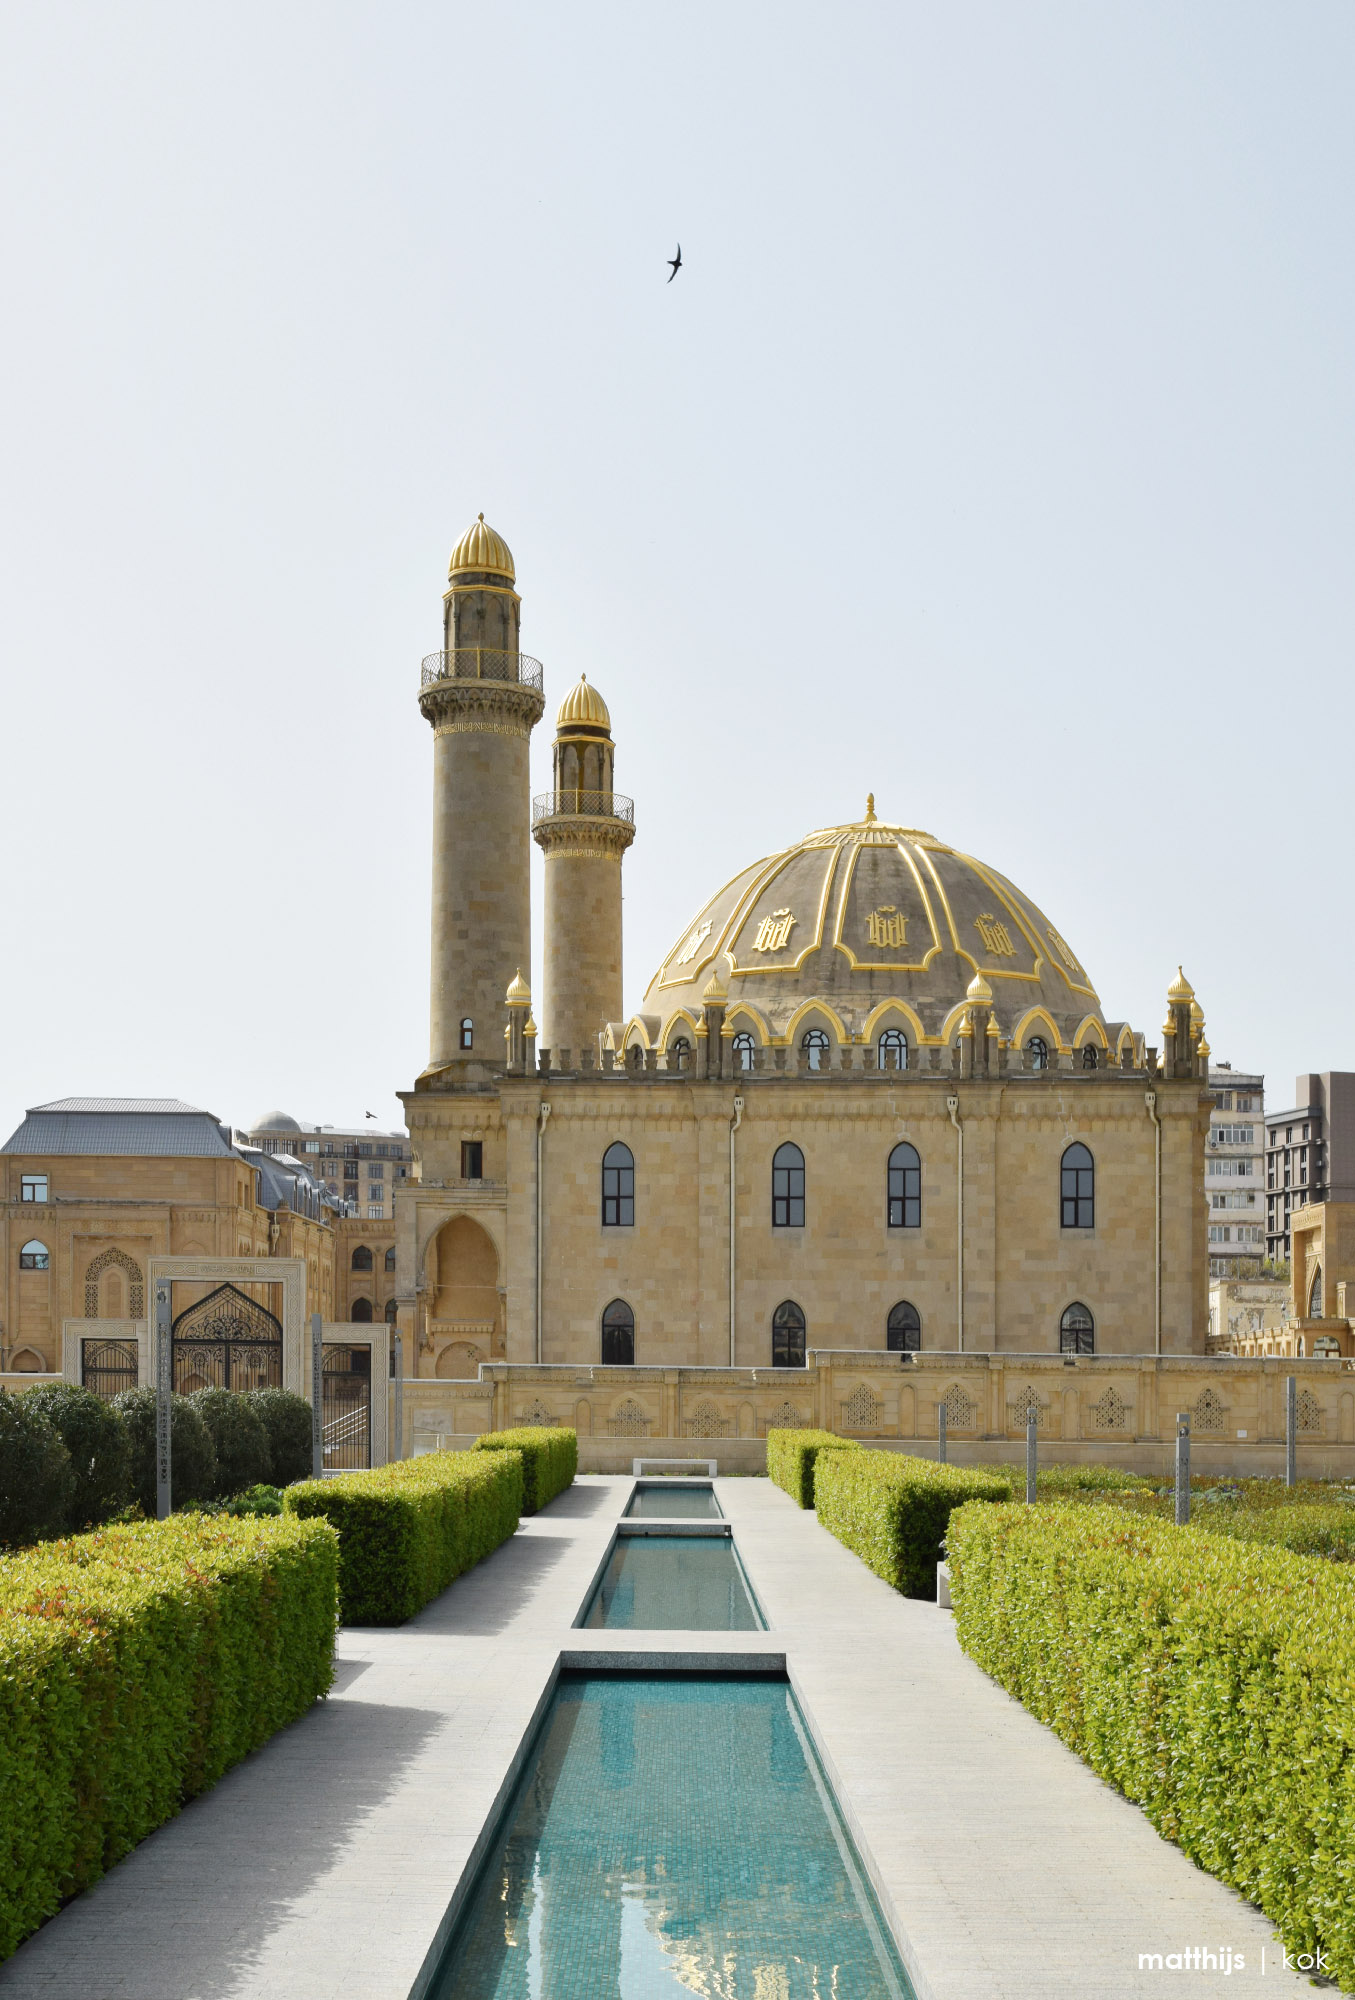 Təzə Pir Mosque, Baku, Azerbaijan | Photo by Matthijs Kok